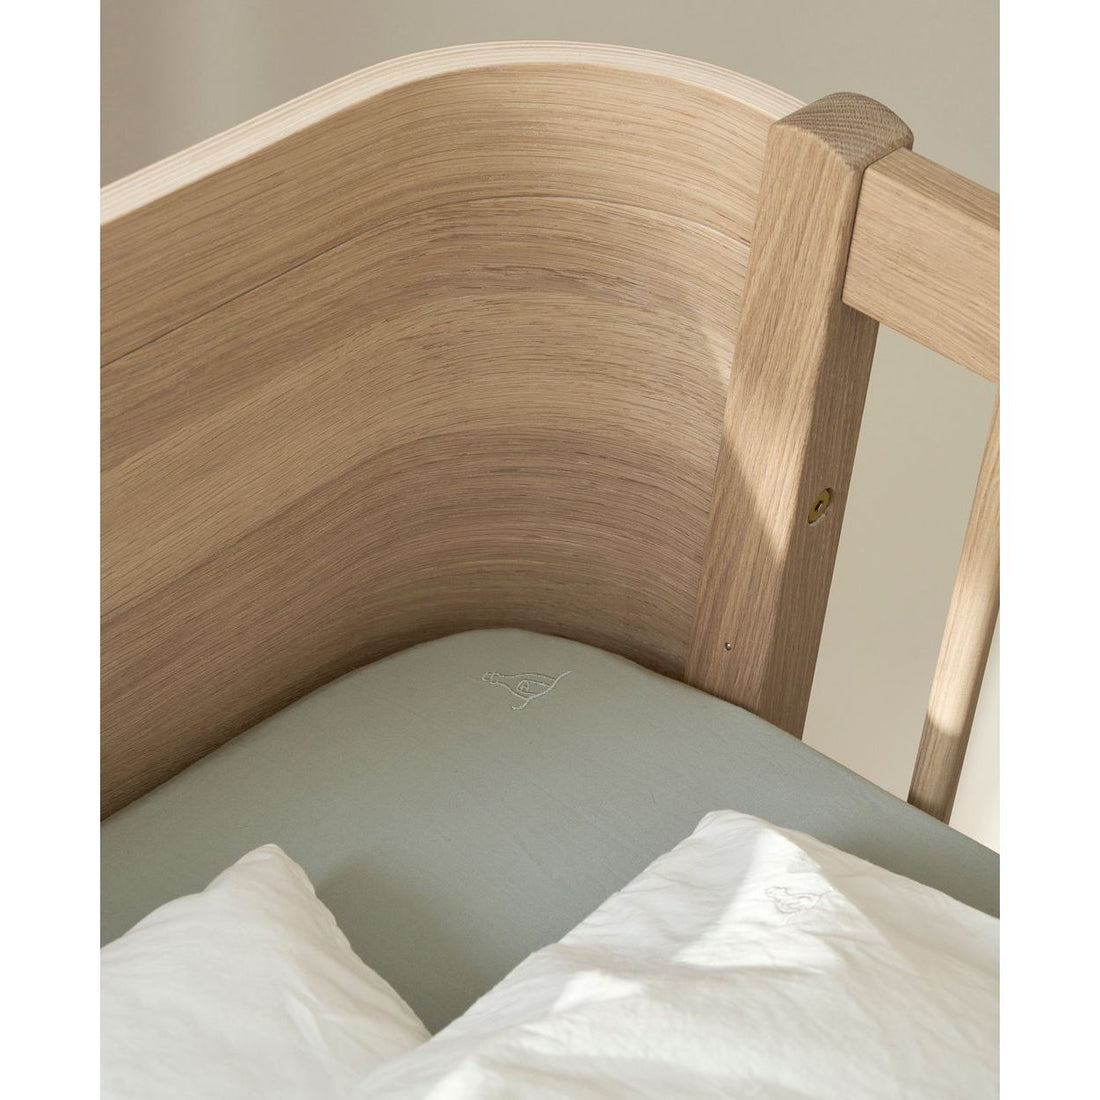 Oliver Furniture Wood Mini+ Low Bunk Bed Oak